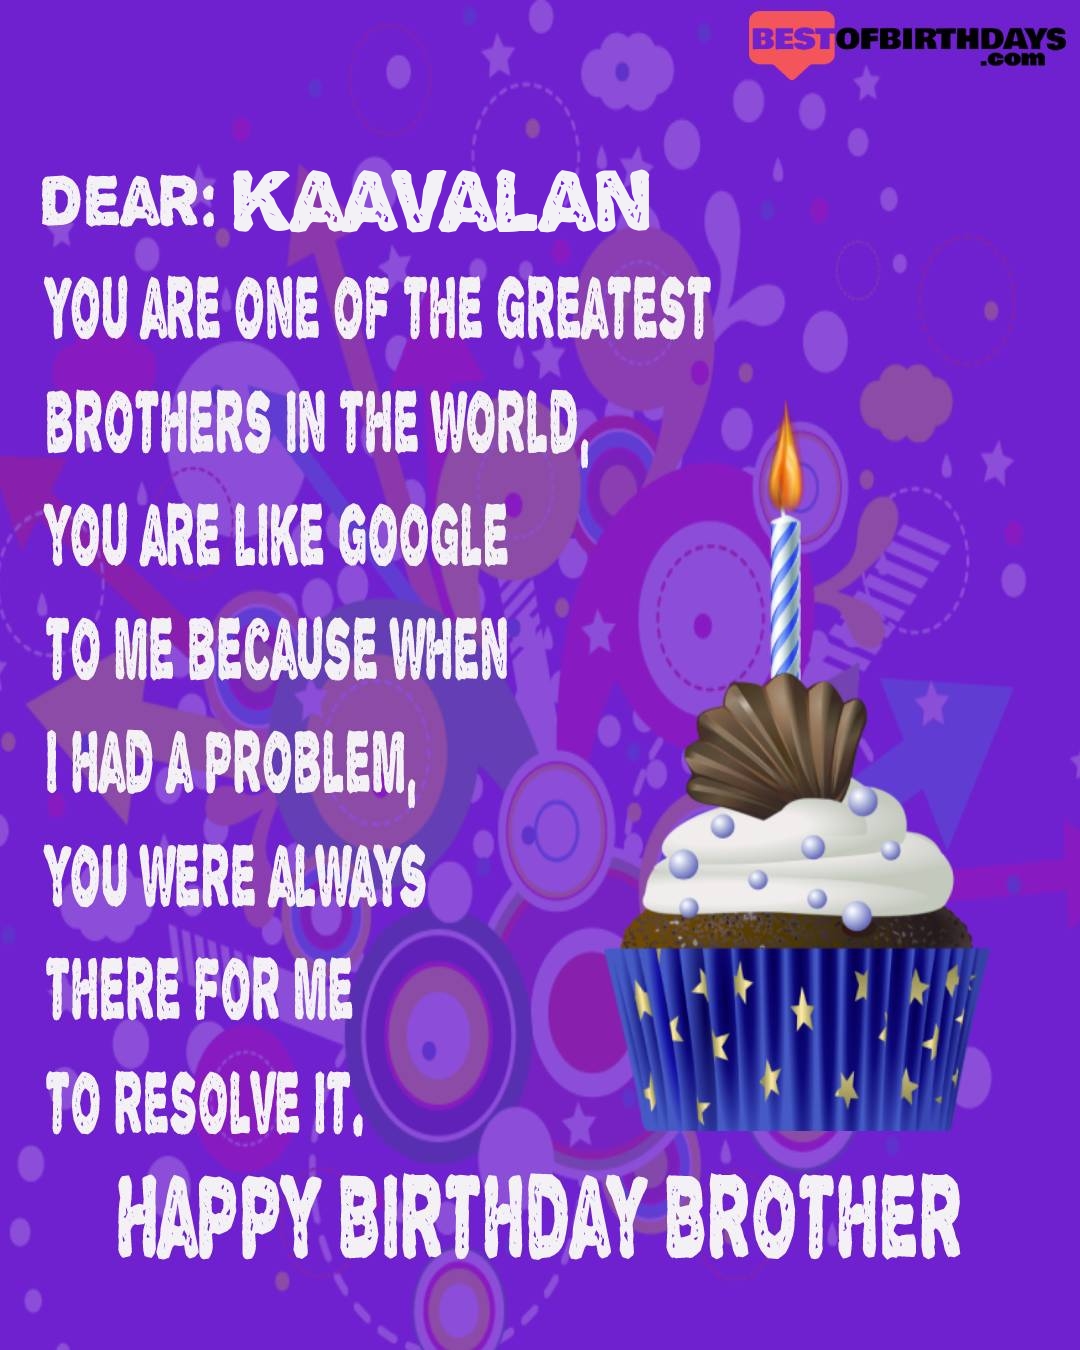 Happy birthday kaavalan bhai brother bro